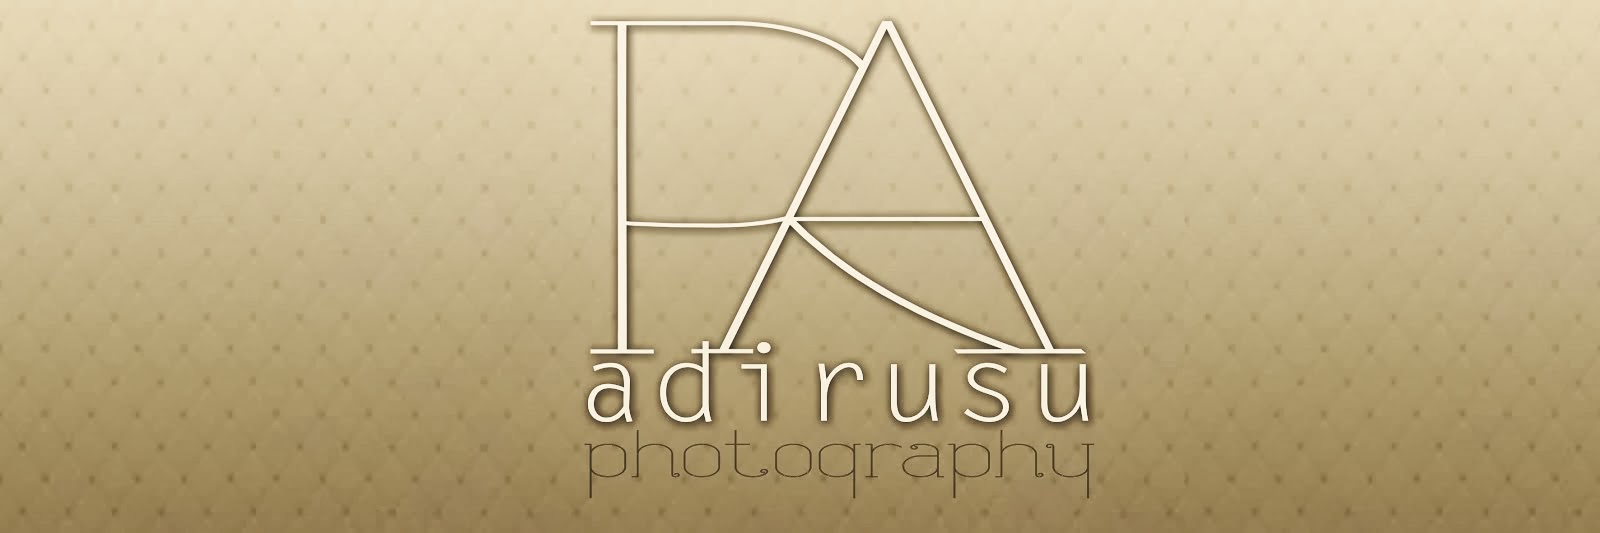 Rusu Adrian Photography